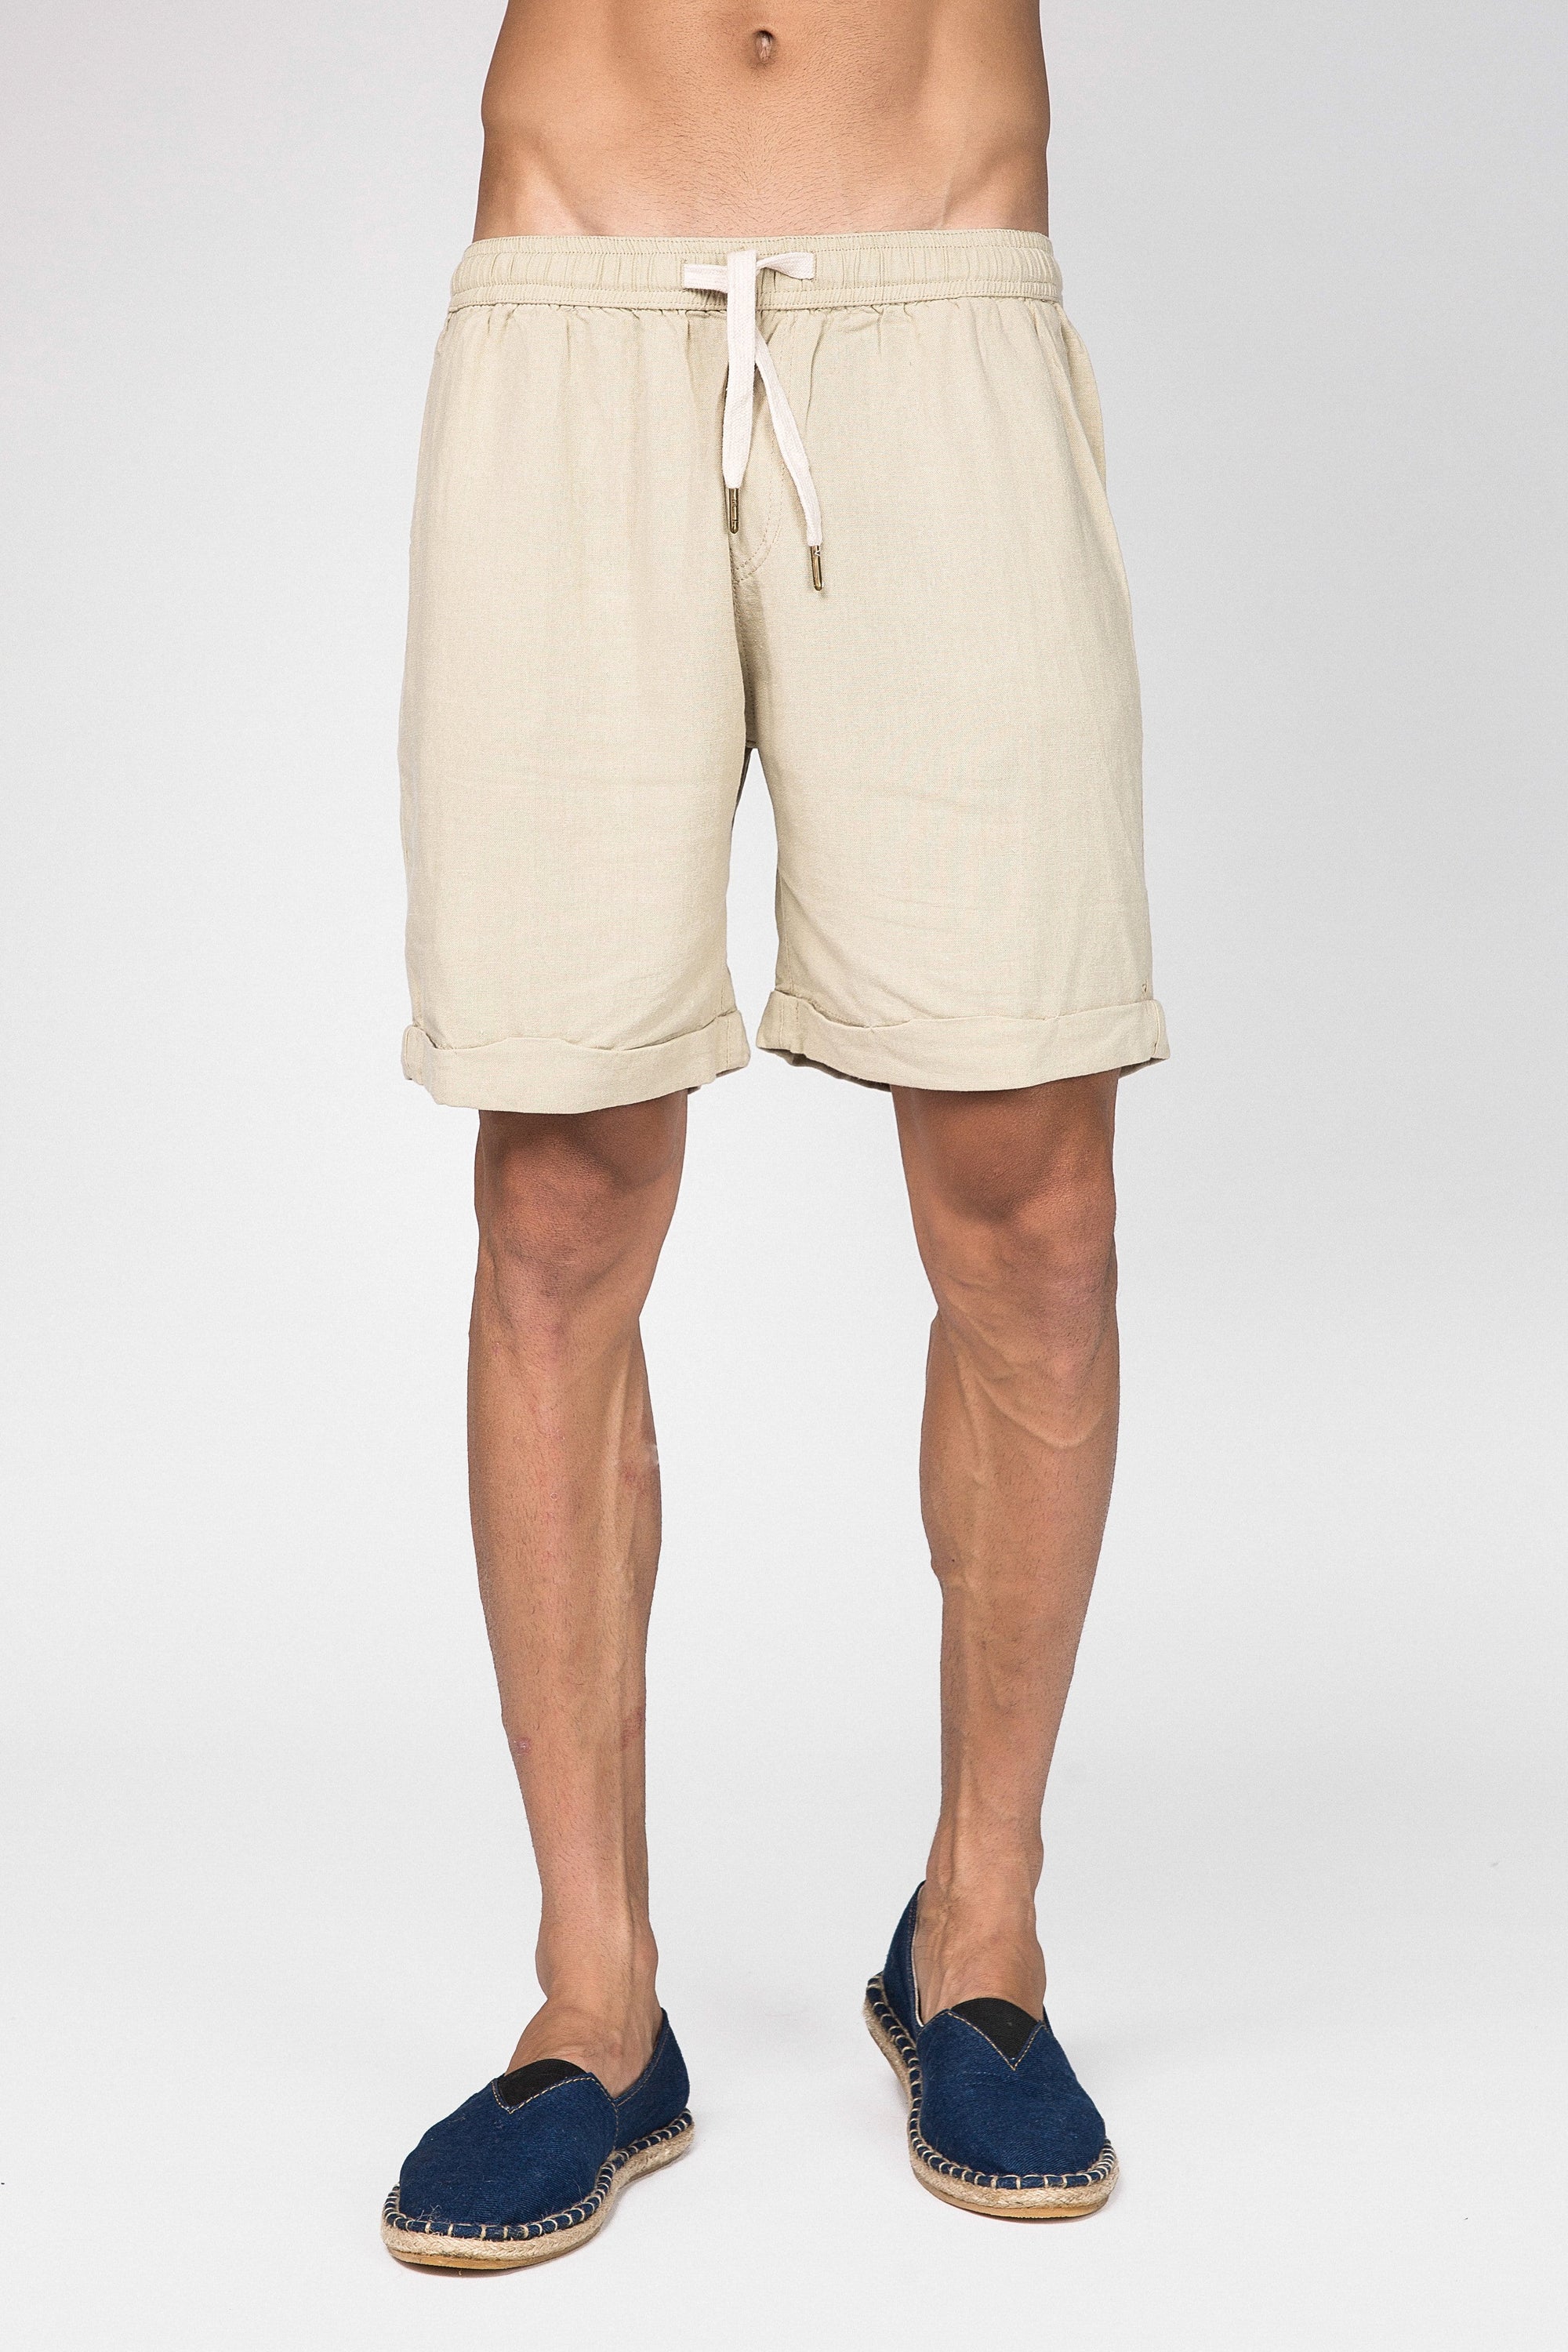 Wholesale Linen Short - Man Short - LOST IN PARADISE